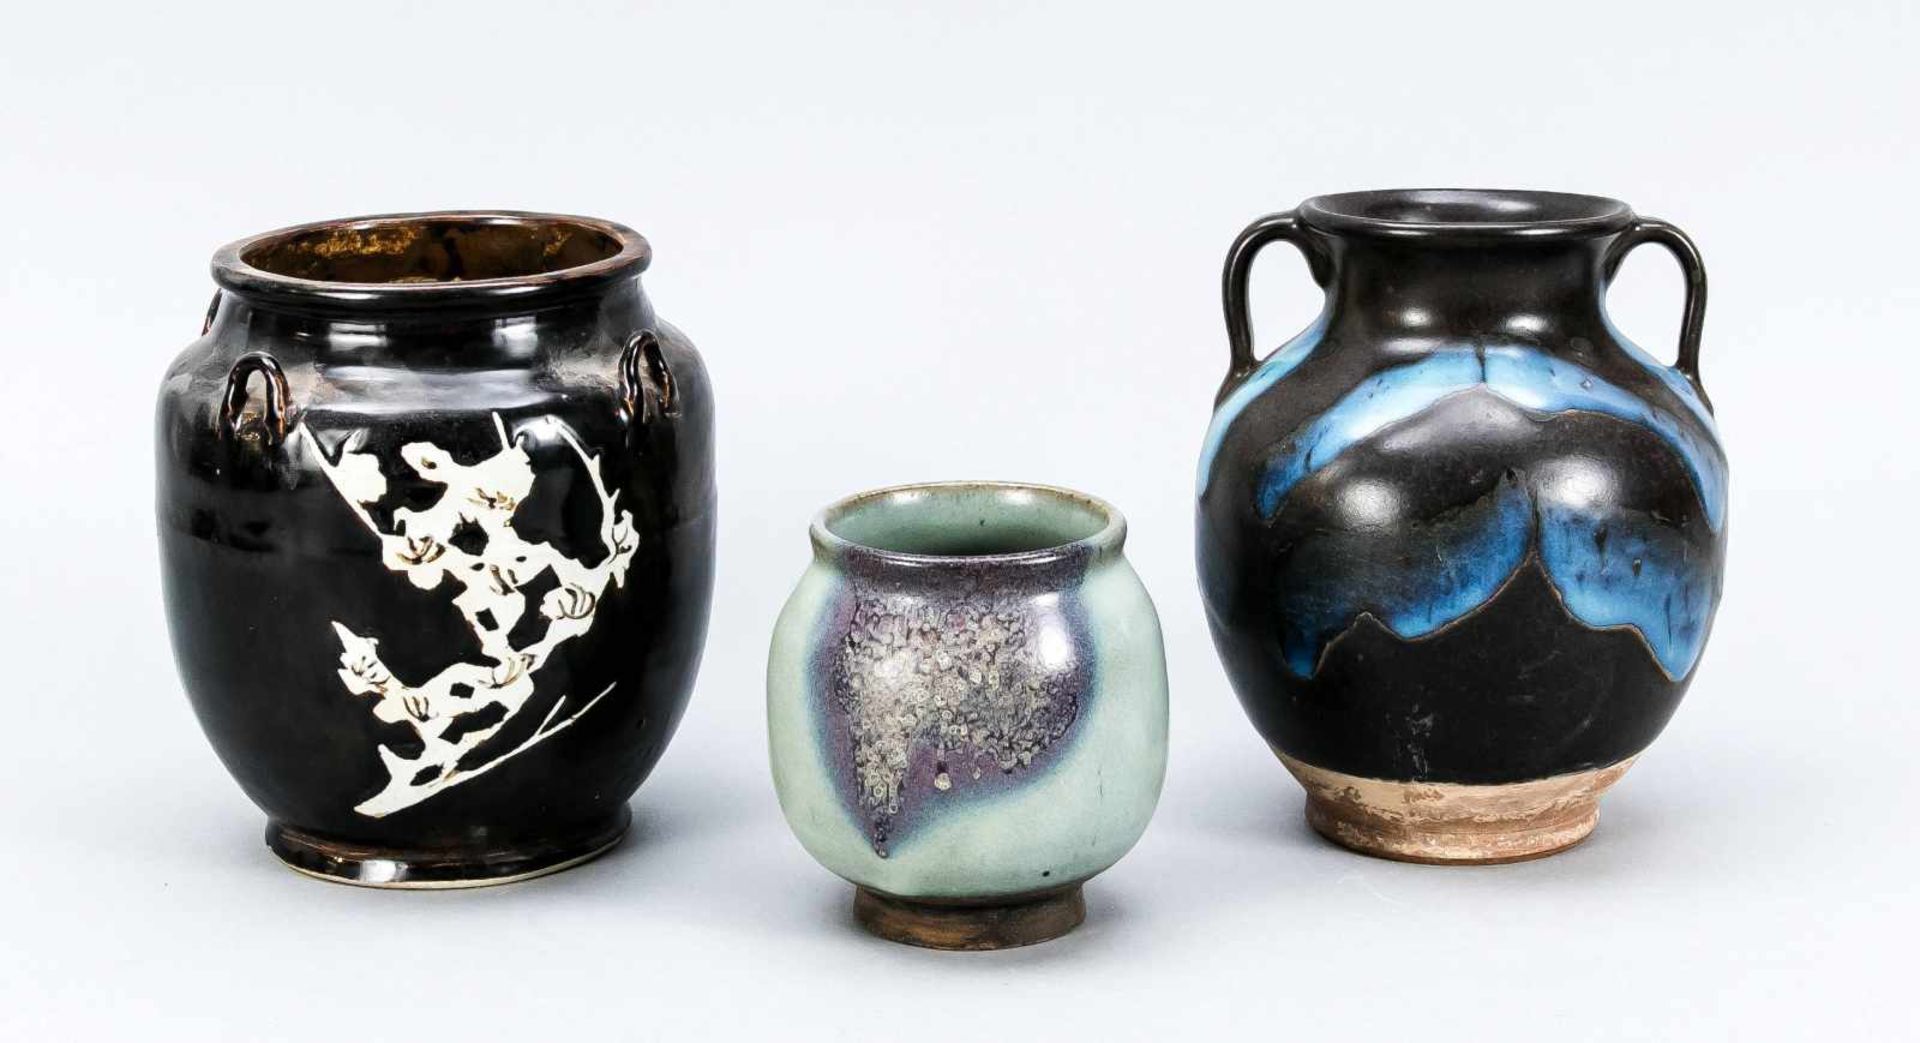 3 parts of ceramics, China, 20th century. 1 x small Jun ware (vase), 1 x handle pot with